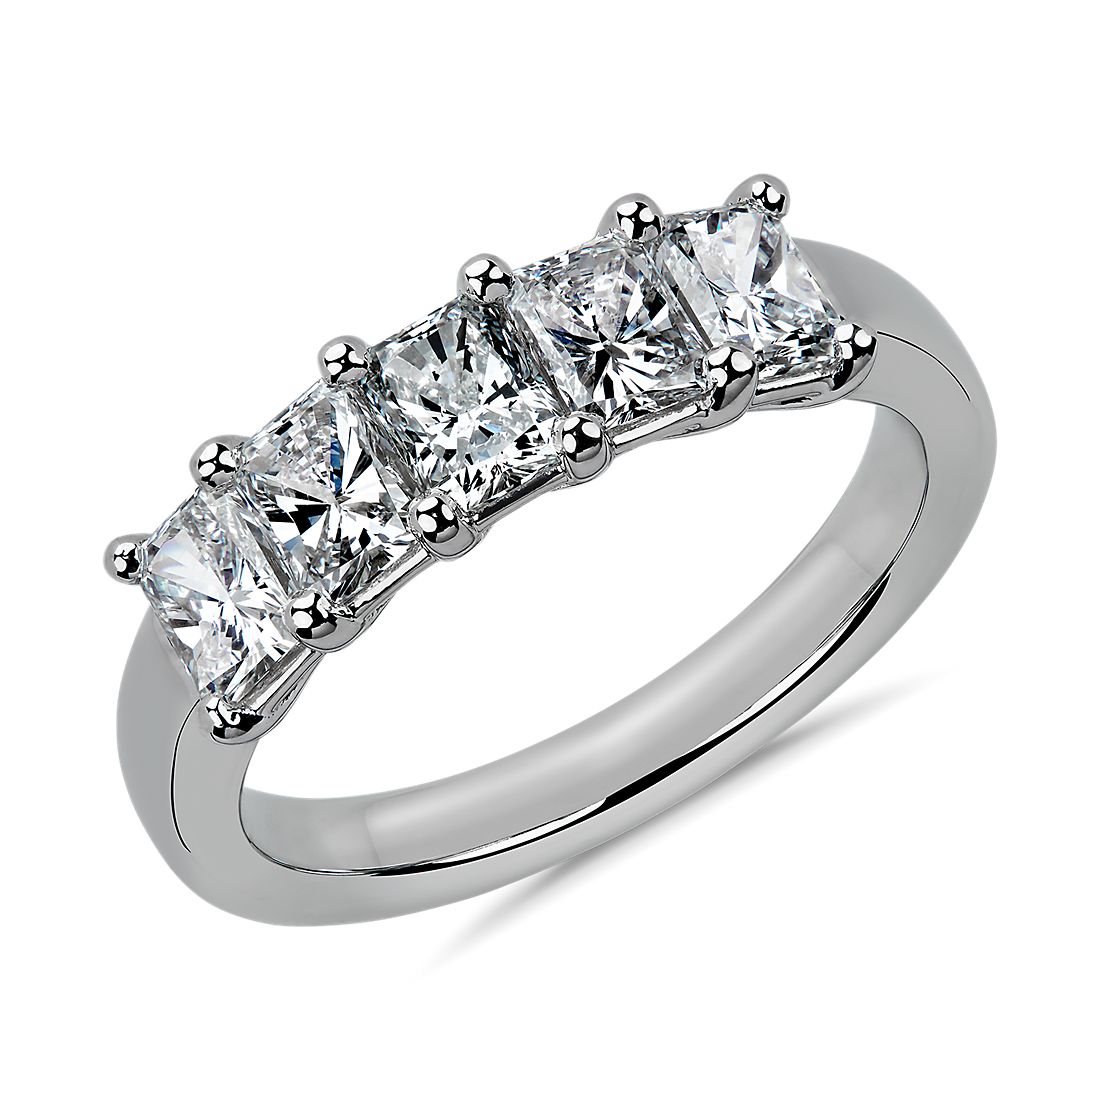 Five Stone Radiant Cut Diamond Ring in Platinum - G/SI1 (1 1/2 ct. tw.)